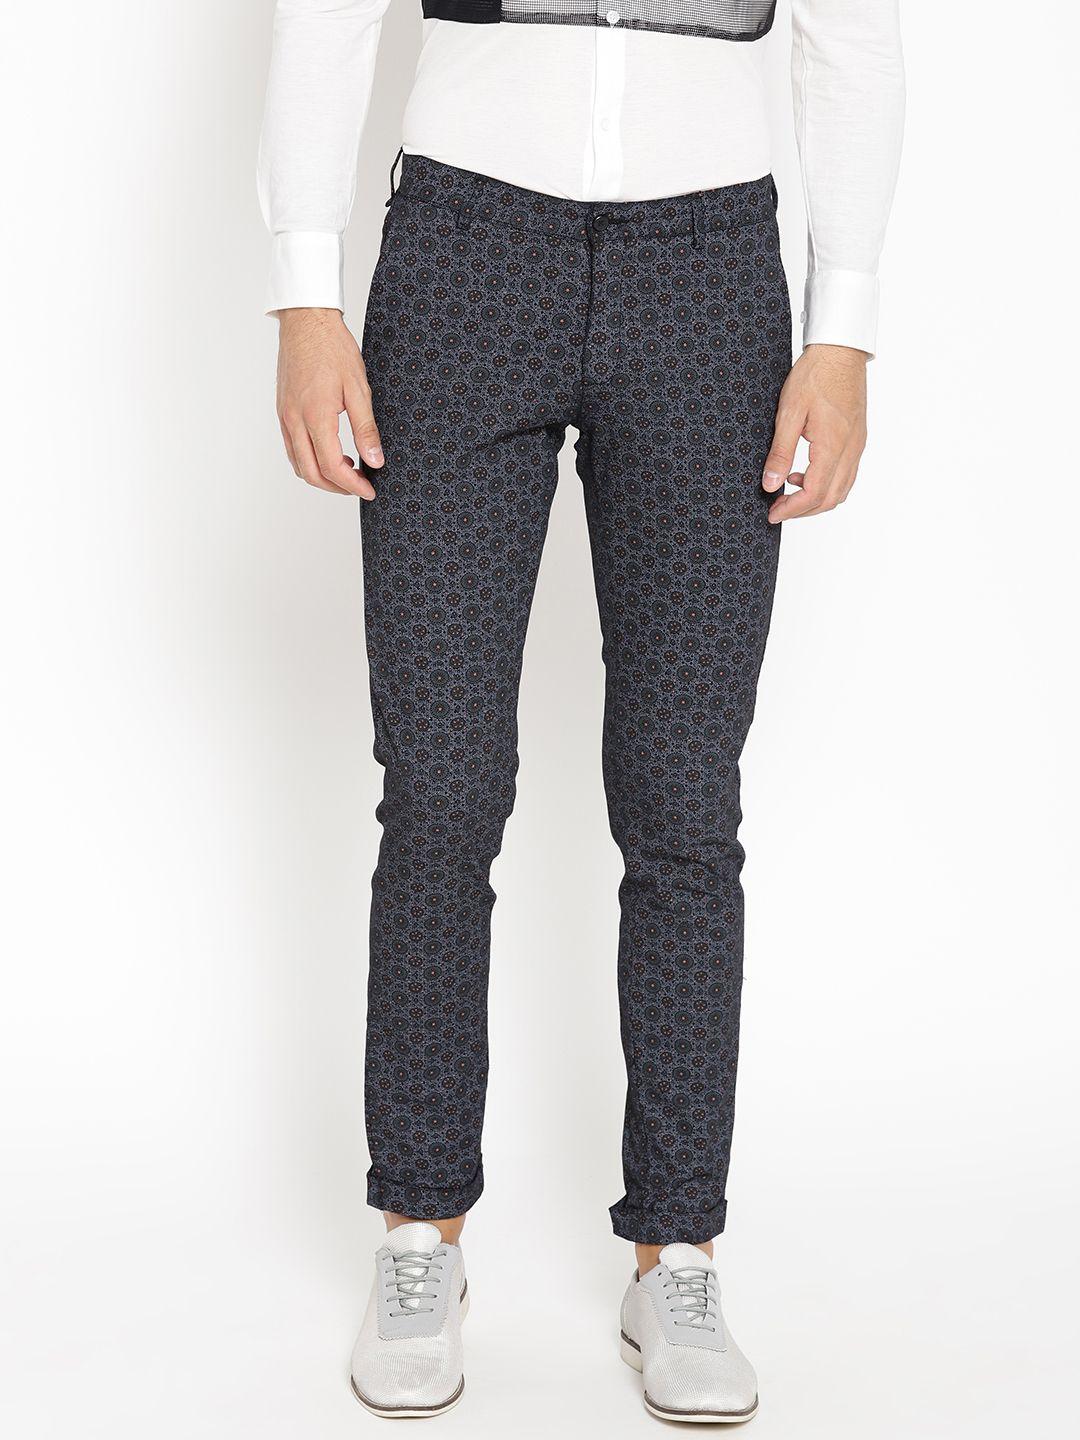 blackberrys men charcoal grey printed z91 slim fit casual trousers